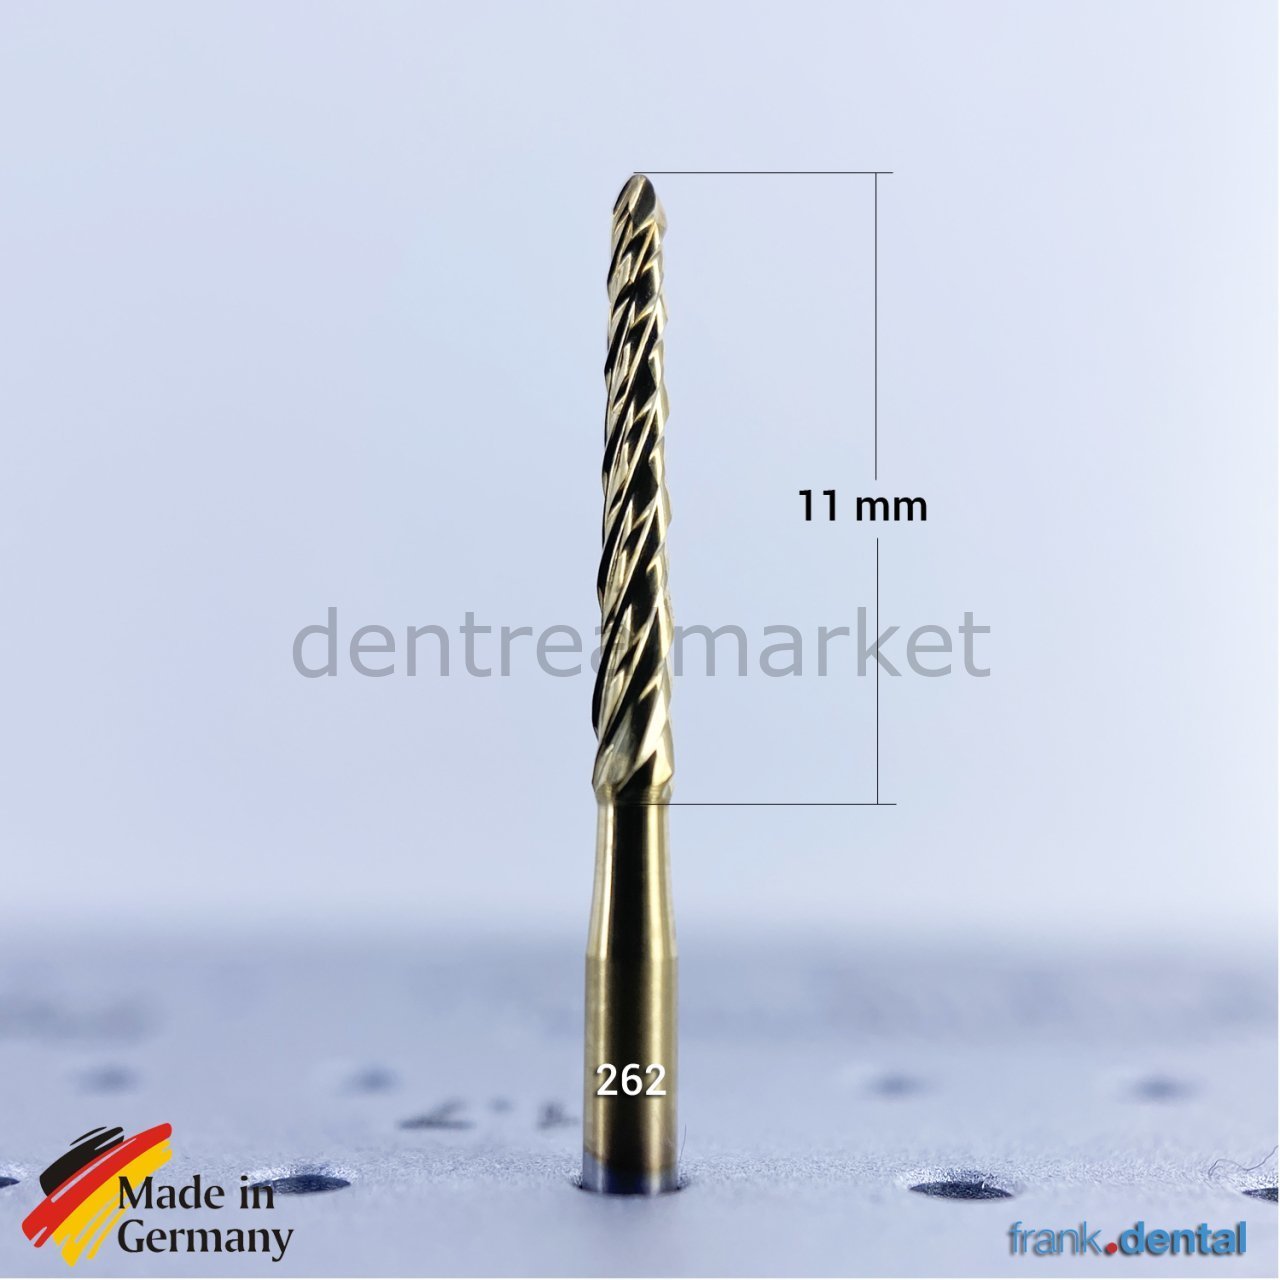 DentrealStore - Frank Dental Titanium Carpide Lindemann Surgical Bur - 262 FGXL